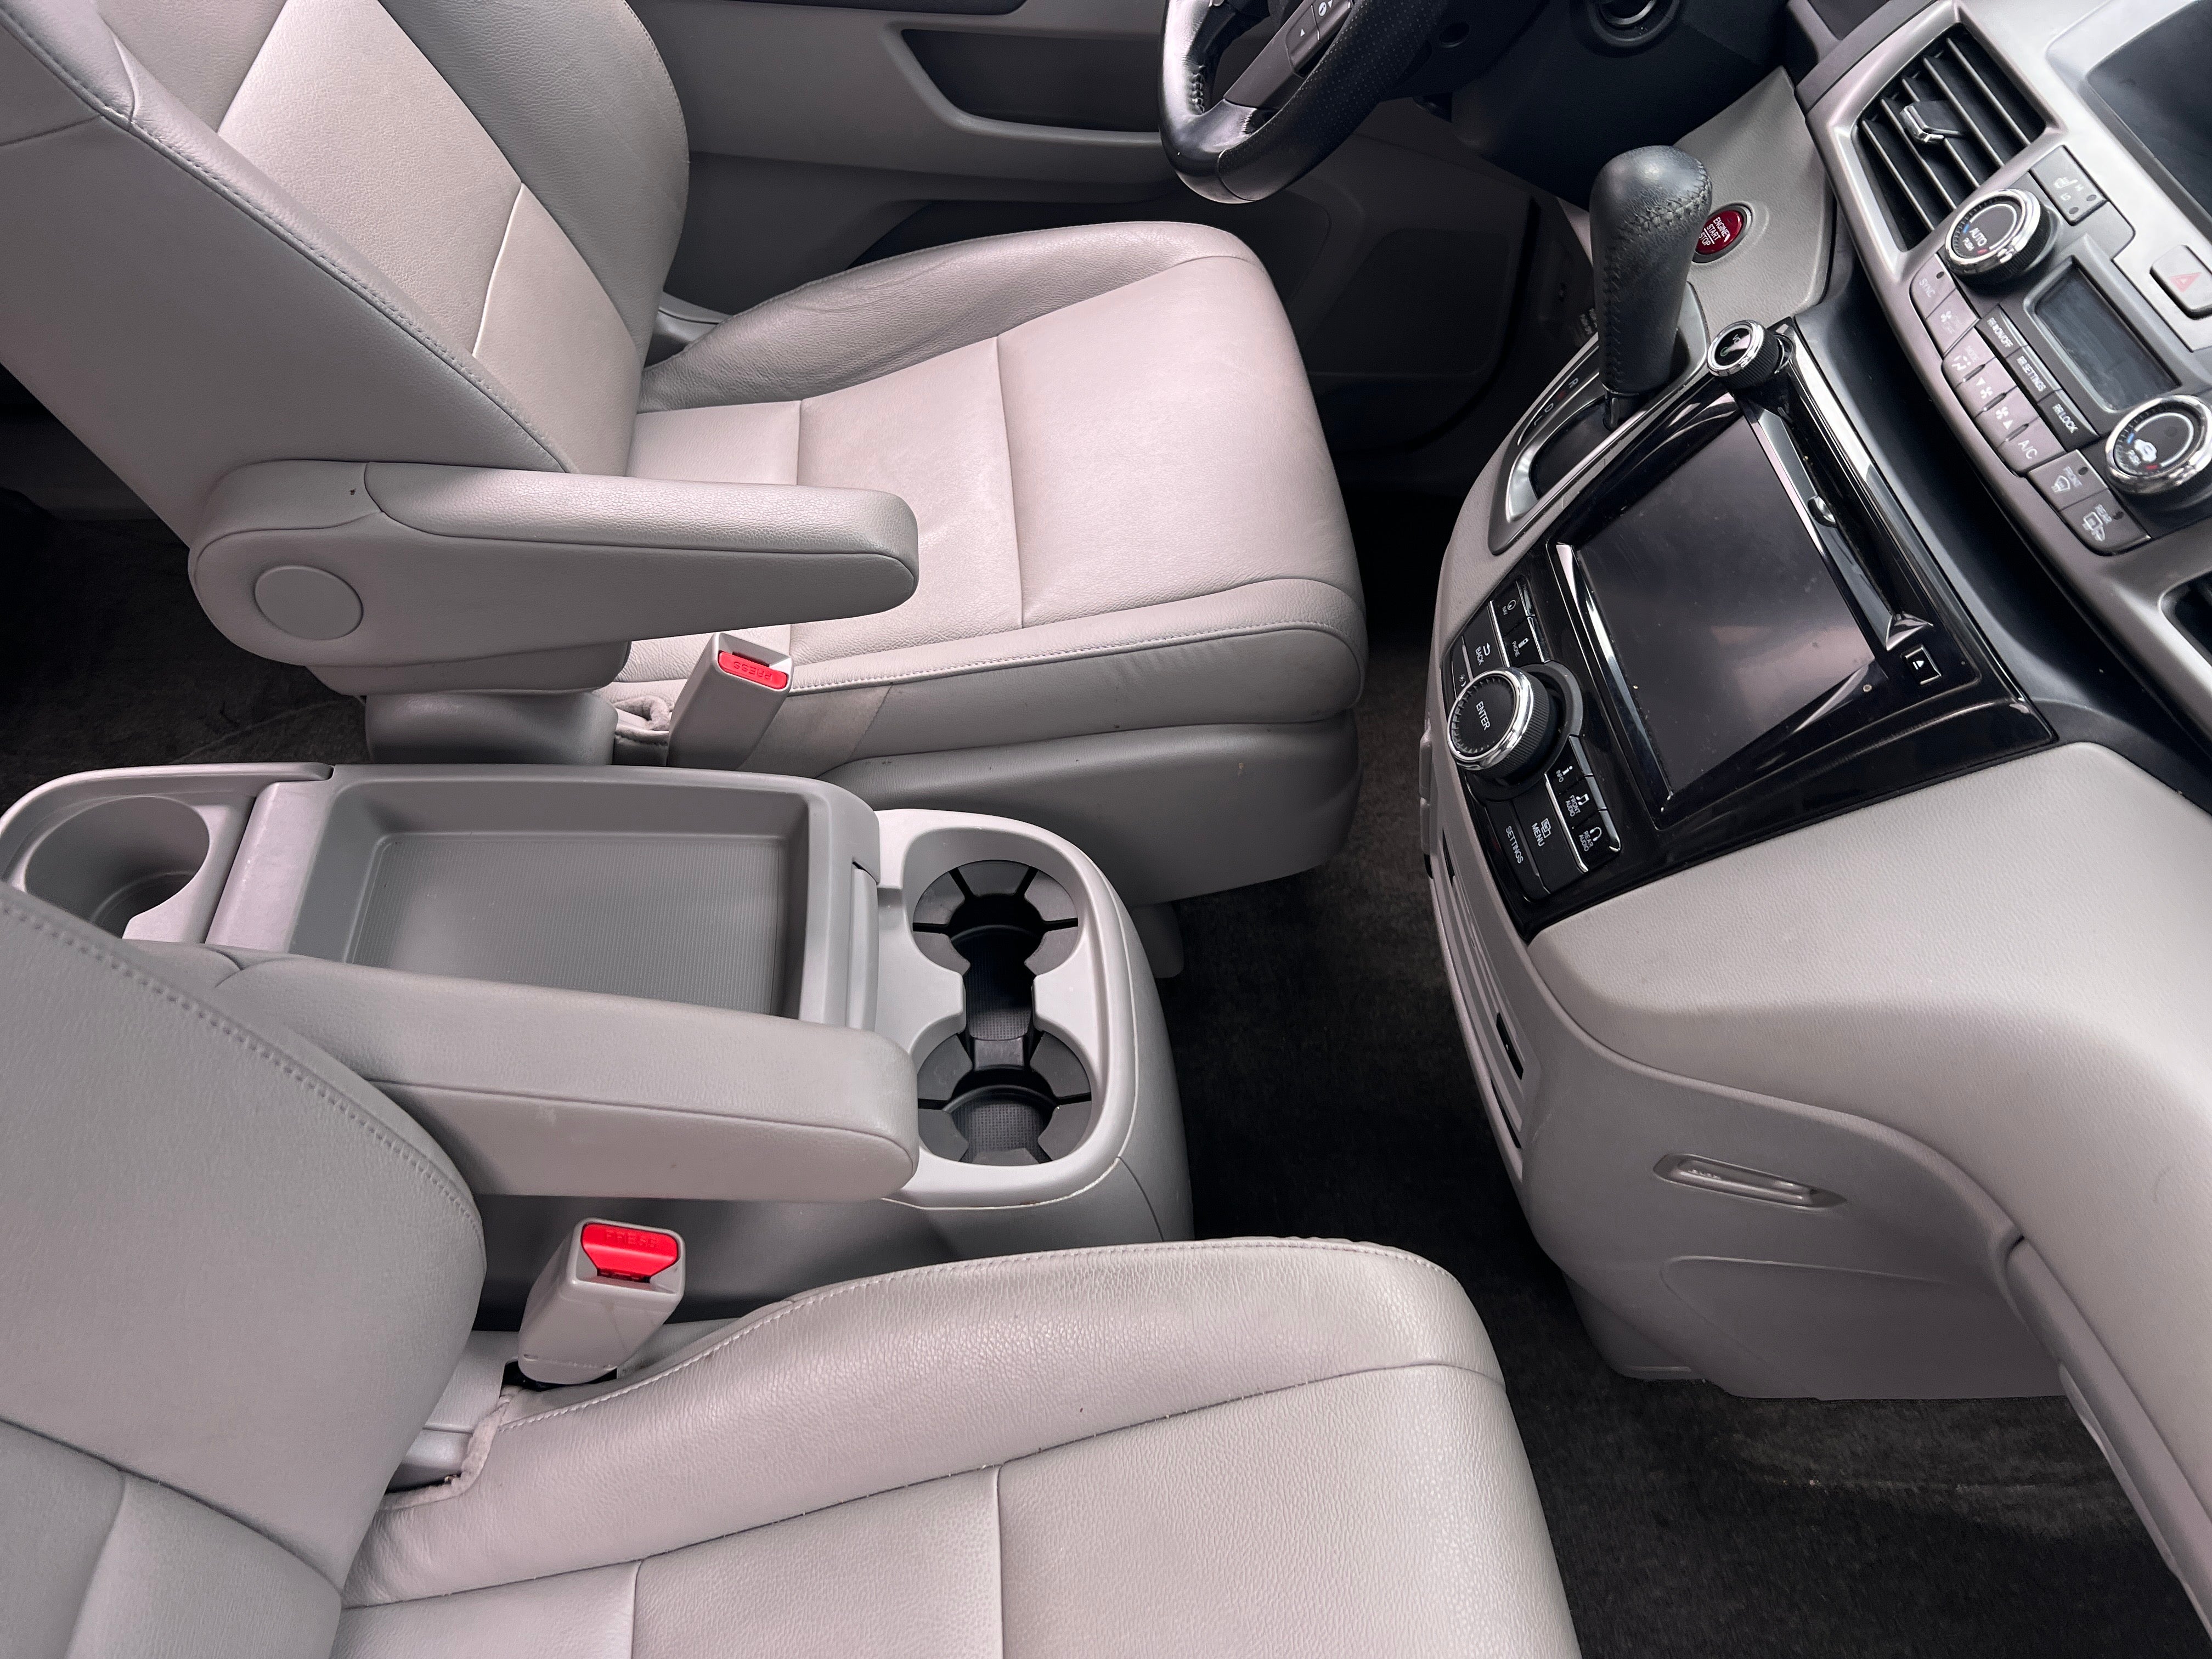 Used 2016 Honda Odyssey | Carvana